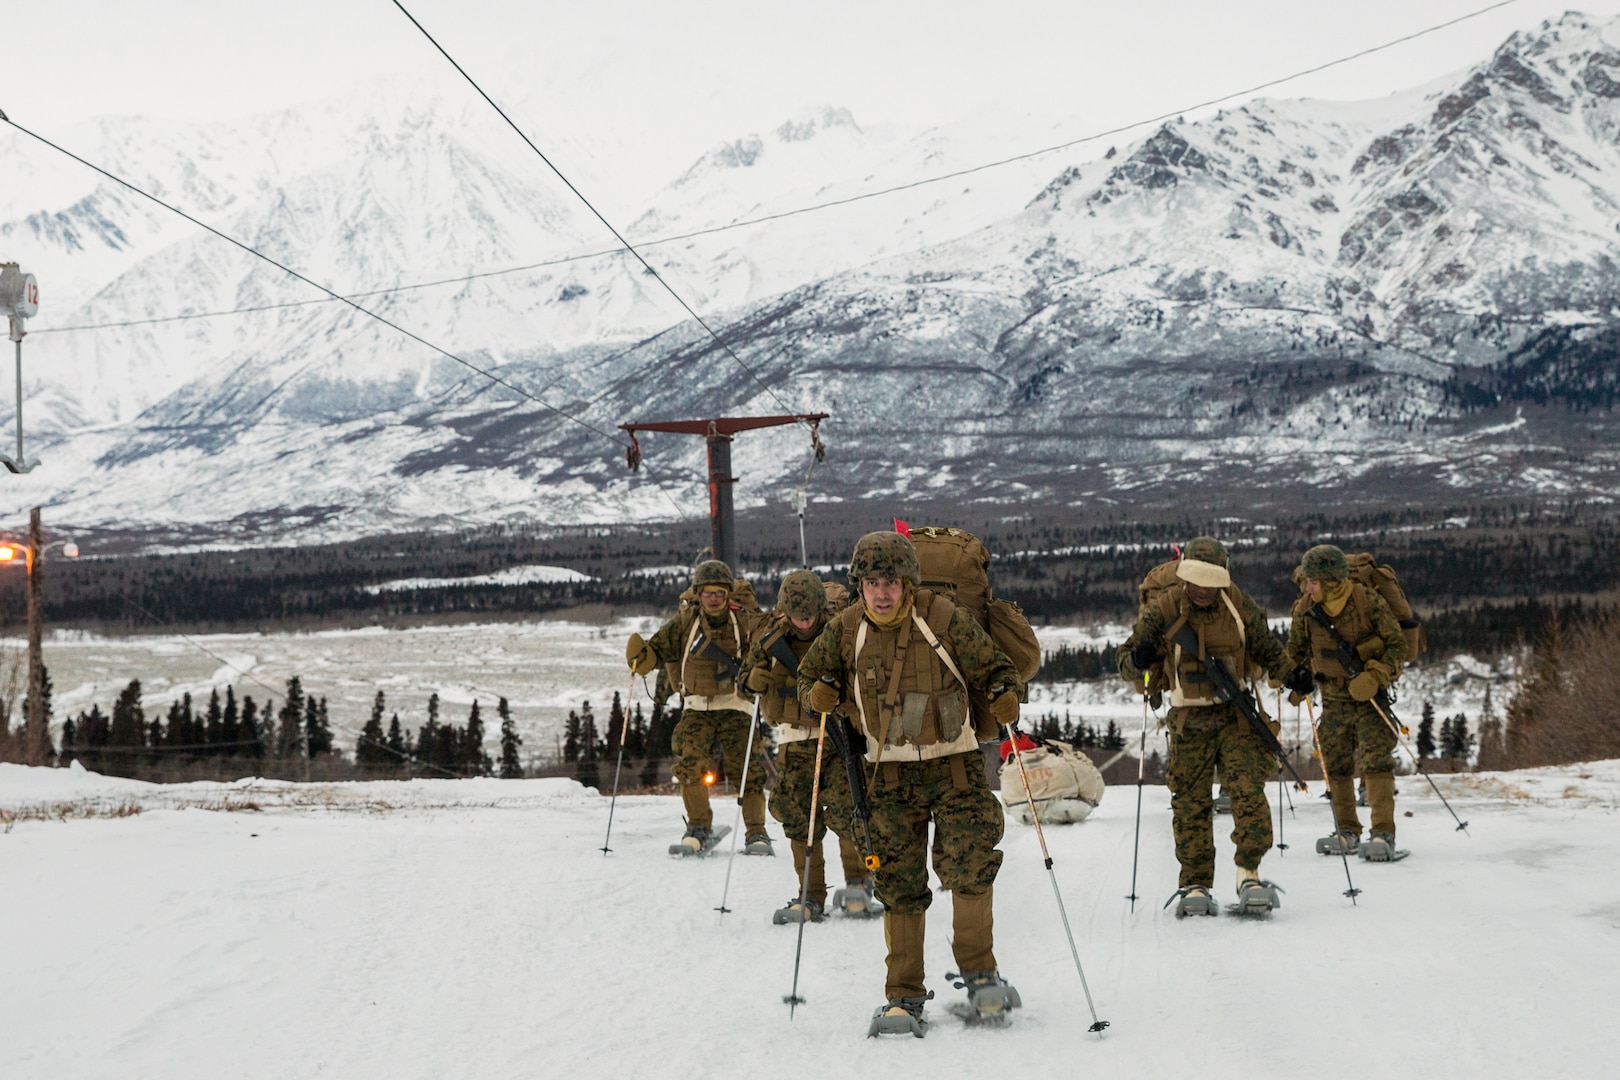 Marines with Combat Logistics Regiment 25, 2nd Marine Logistics Group, tow Ahkio sled containing cold weather gear, at U.S. Army Northern Warfare Training Center, Alaska, February 20, 2018 (U.S. Marine Corps/Sean M. Evans)